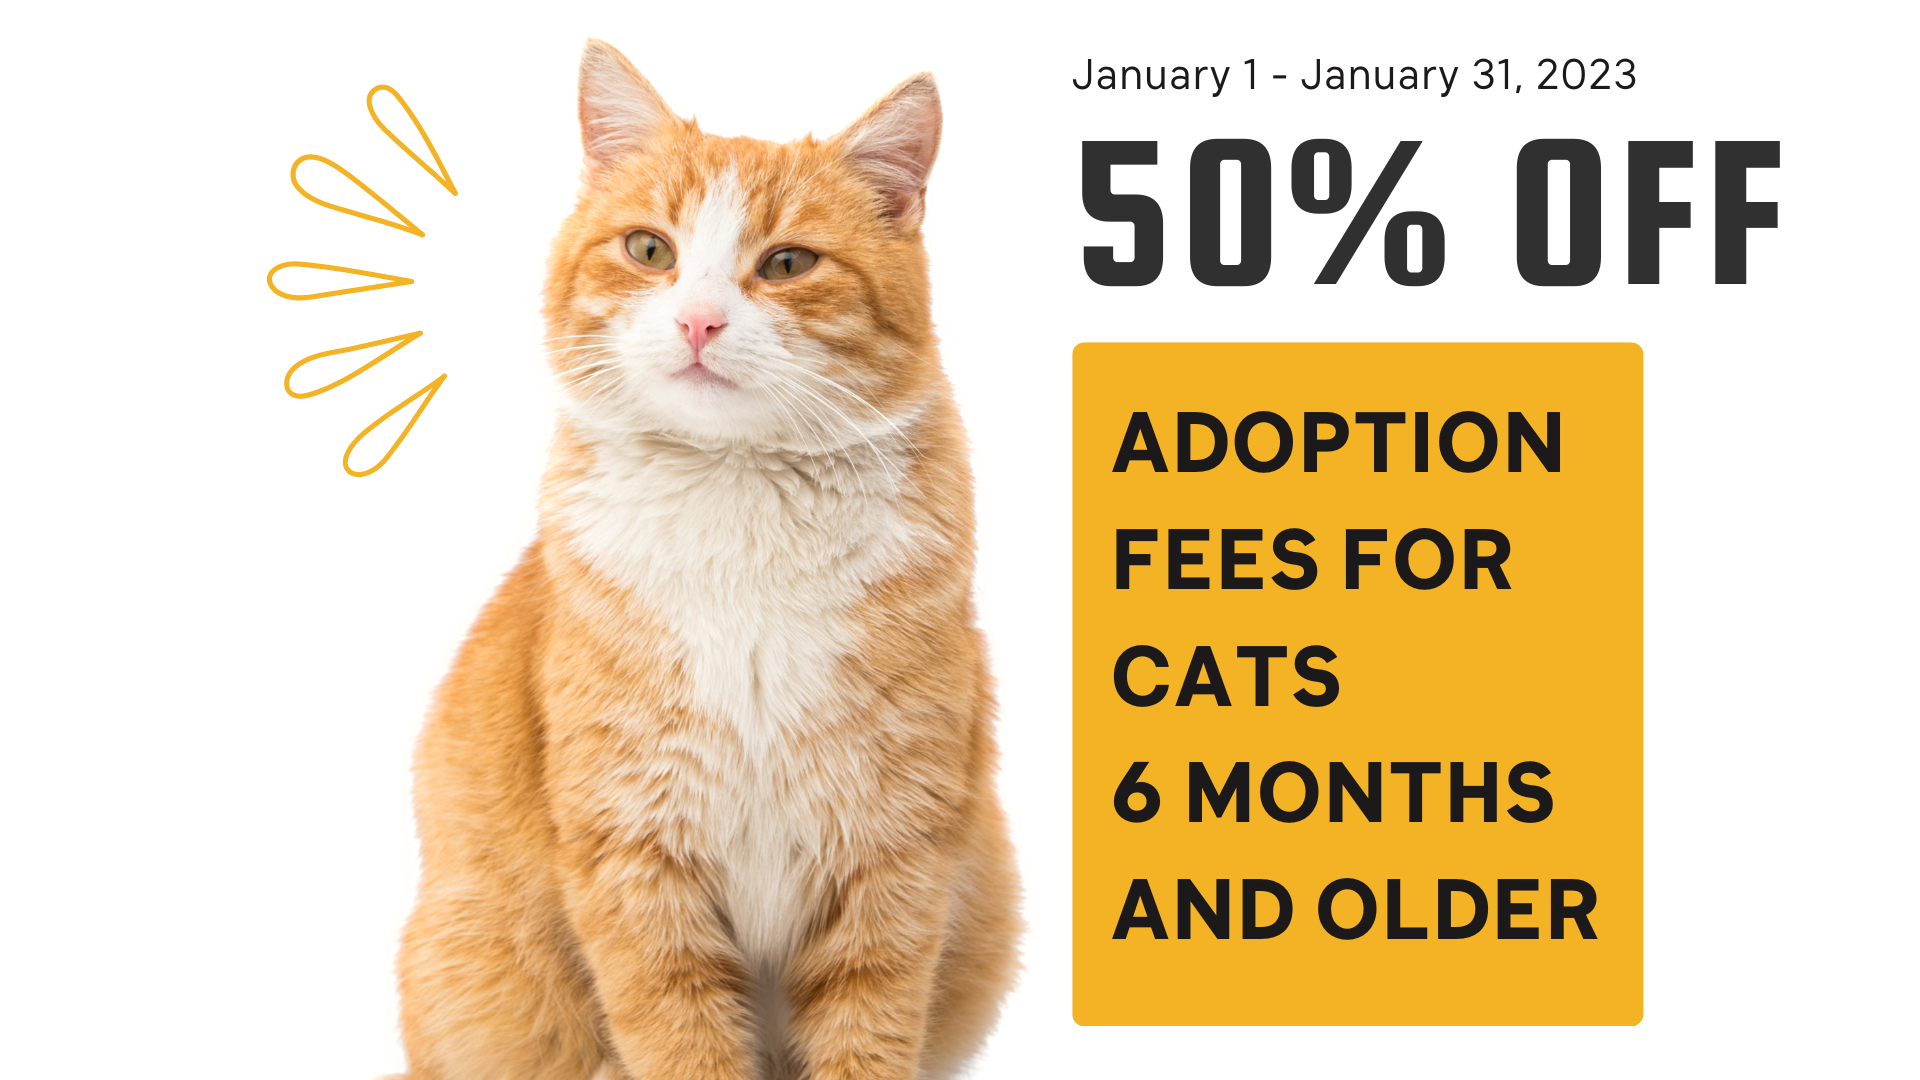 
50% OFF CAT ADOPTION FEES